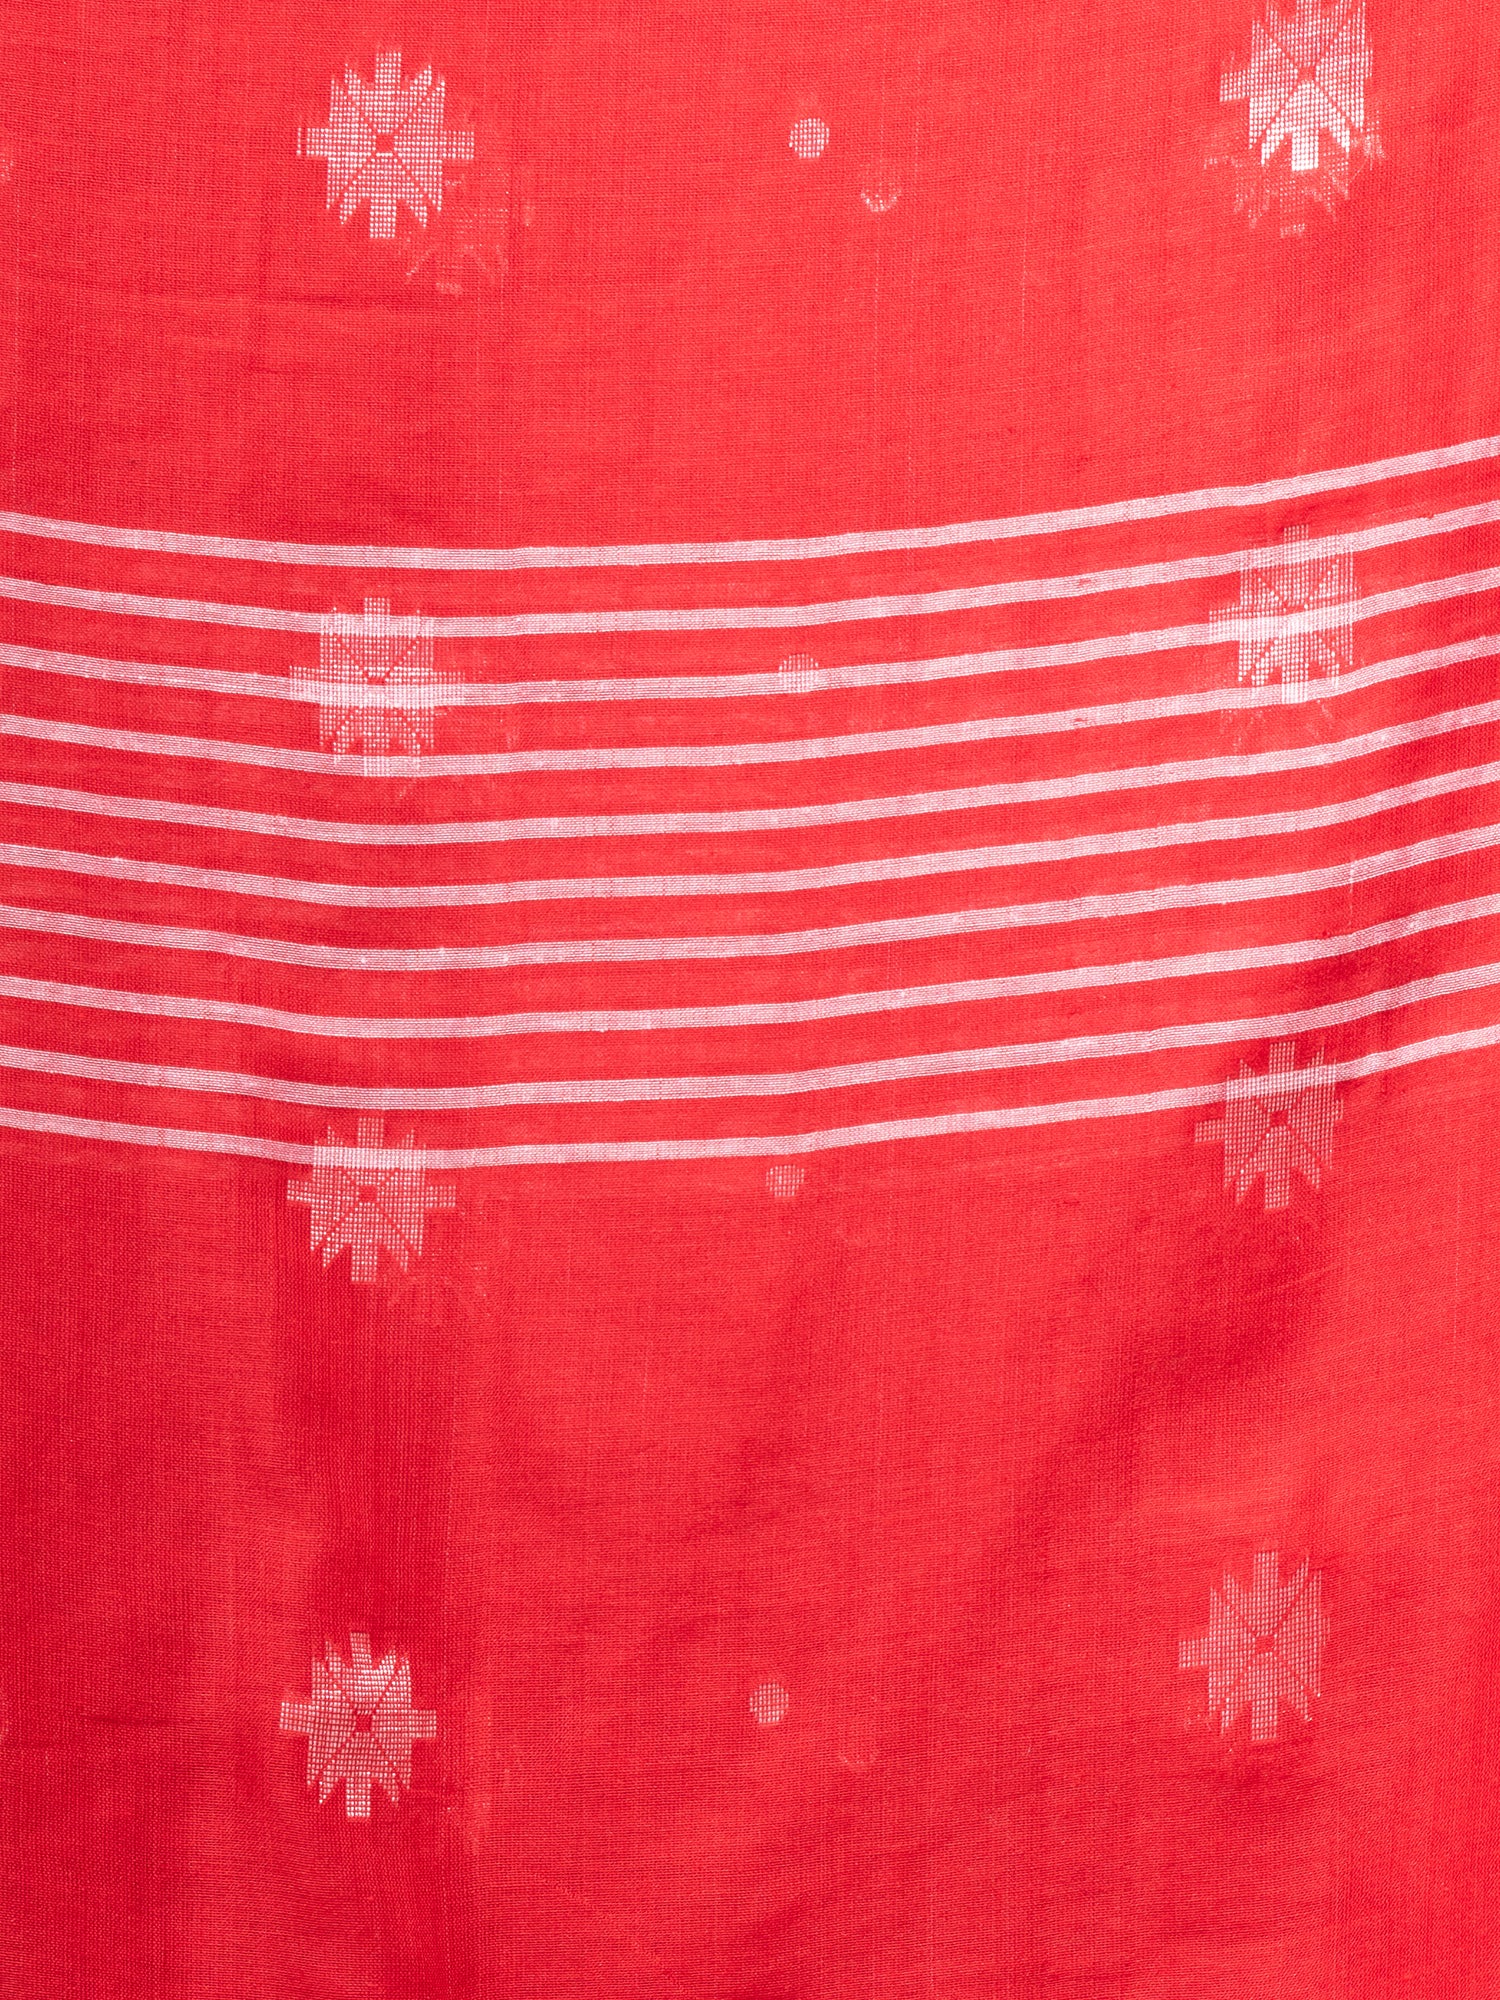 Women's Red Cotton Handloom Saree With White Flower Butta - In Weave Sarees